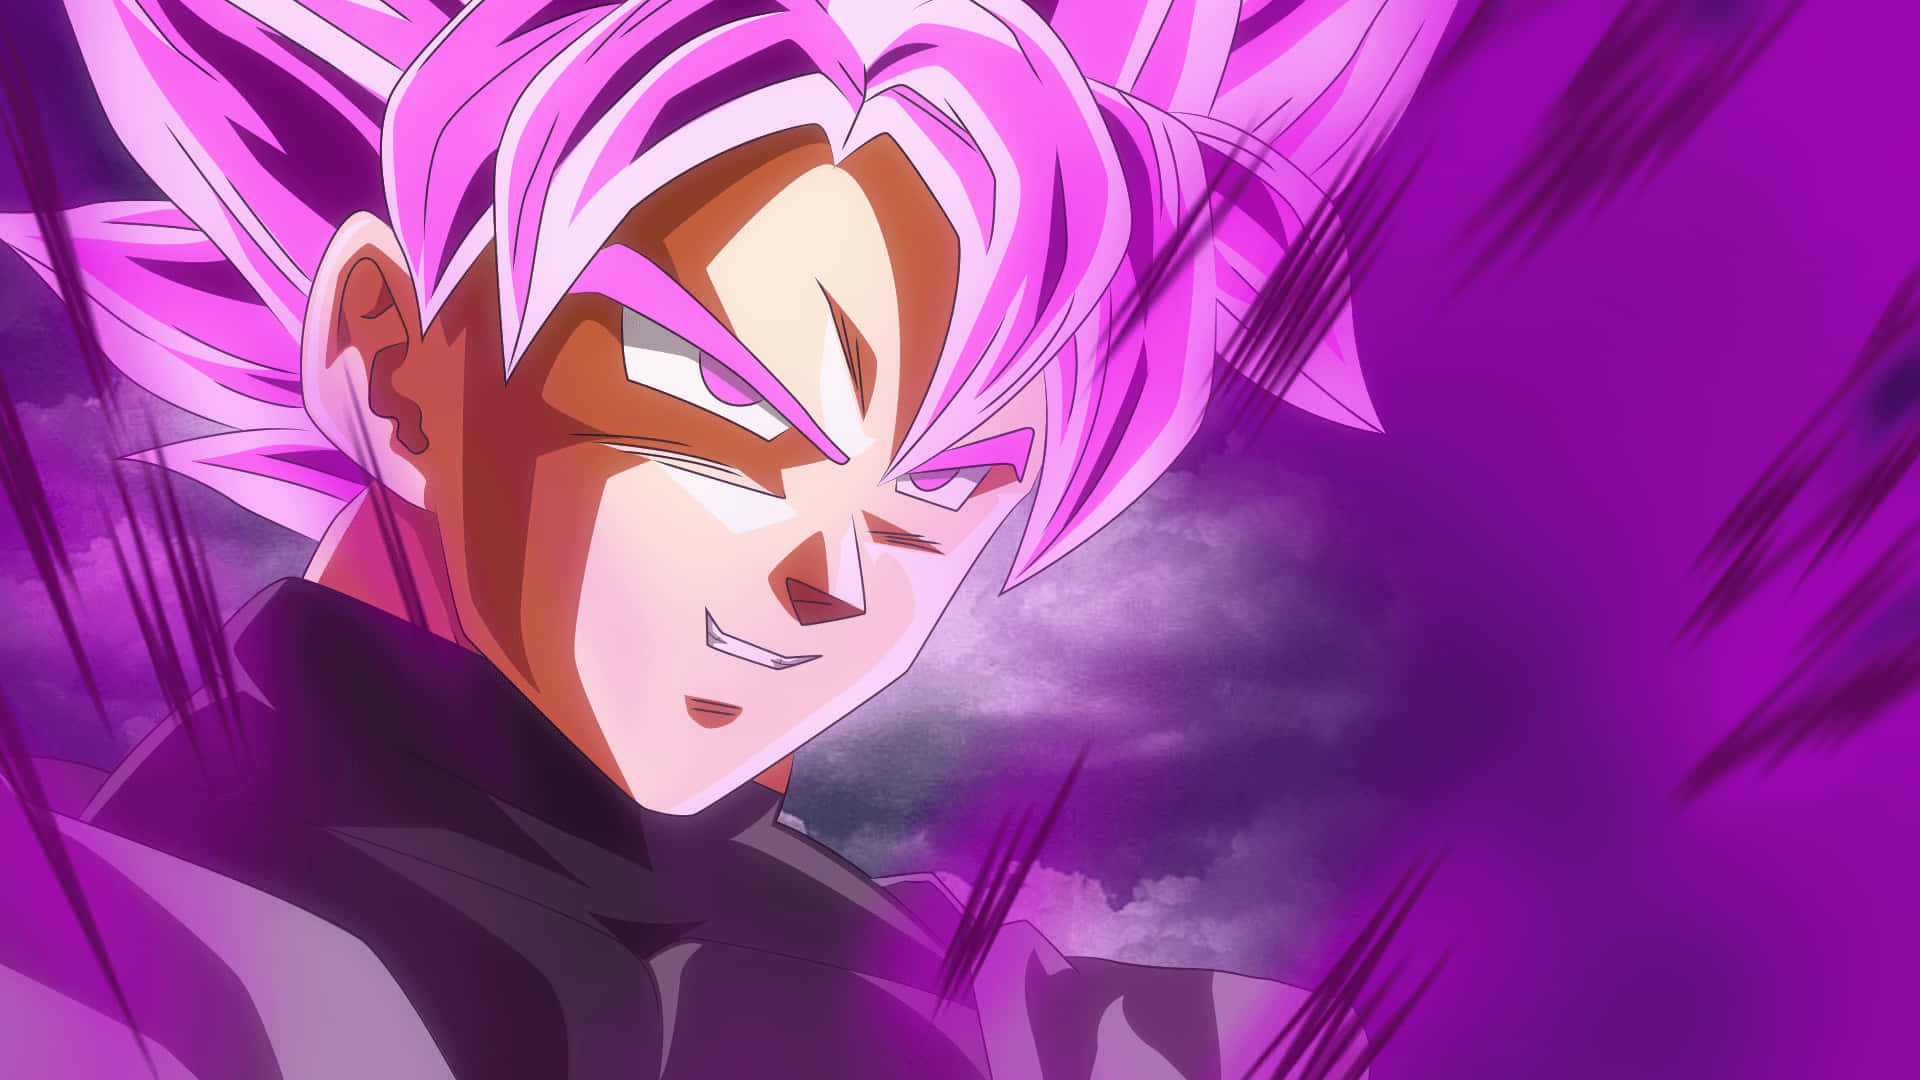 Goku Black - The Fierce Fighter of Dragon Ball Super